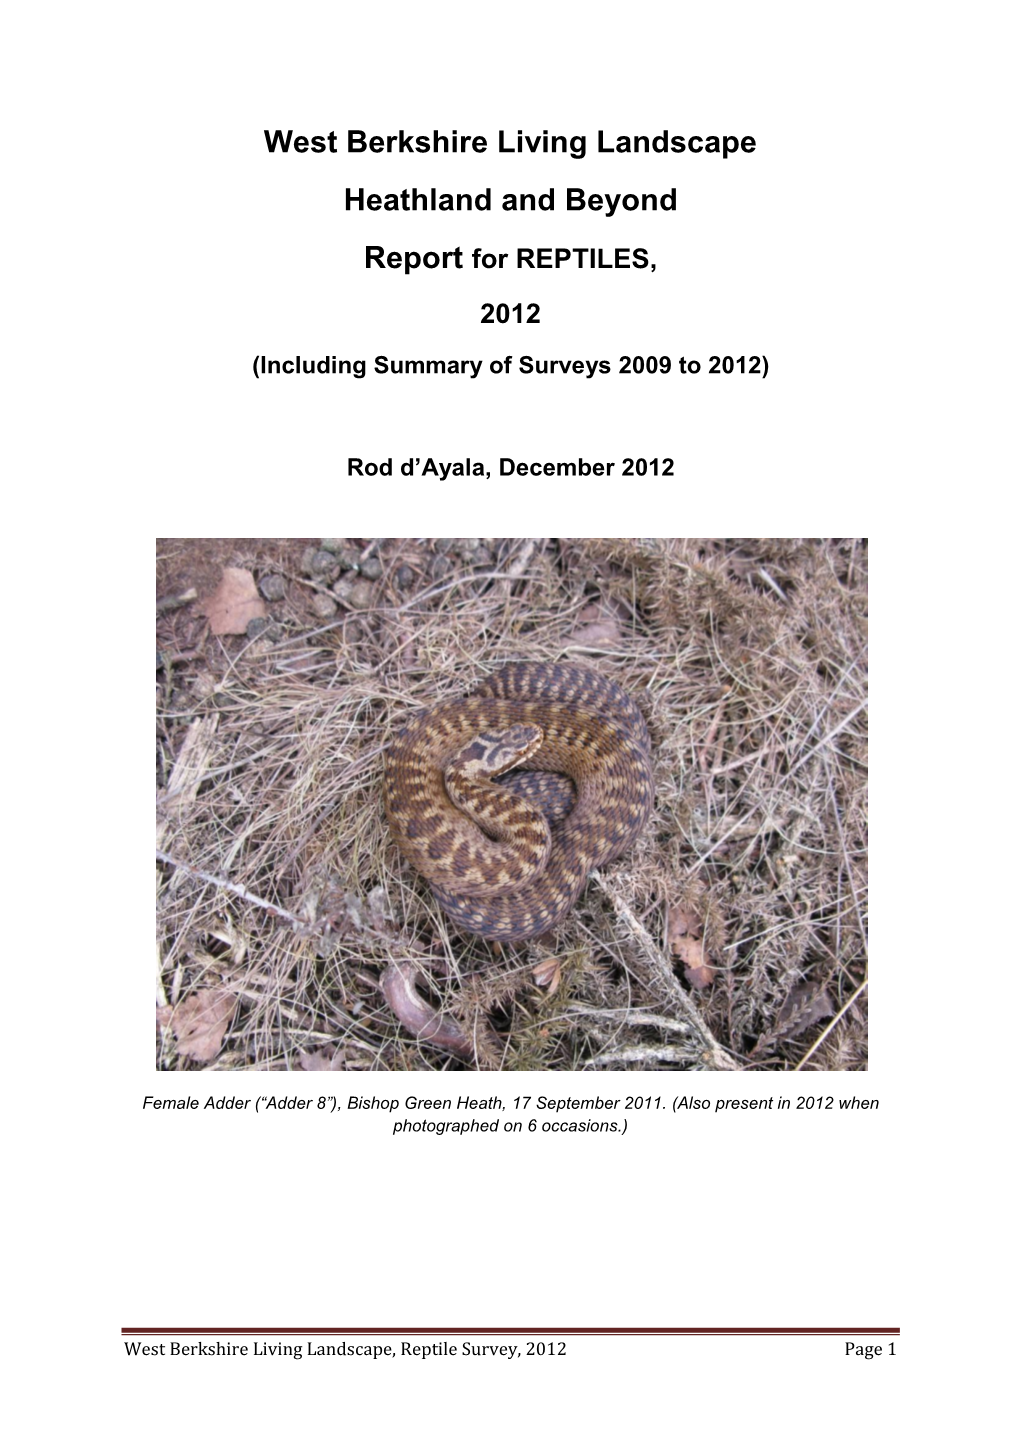 Report for Reptiles 2012